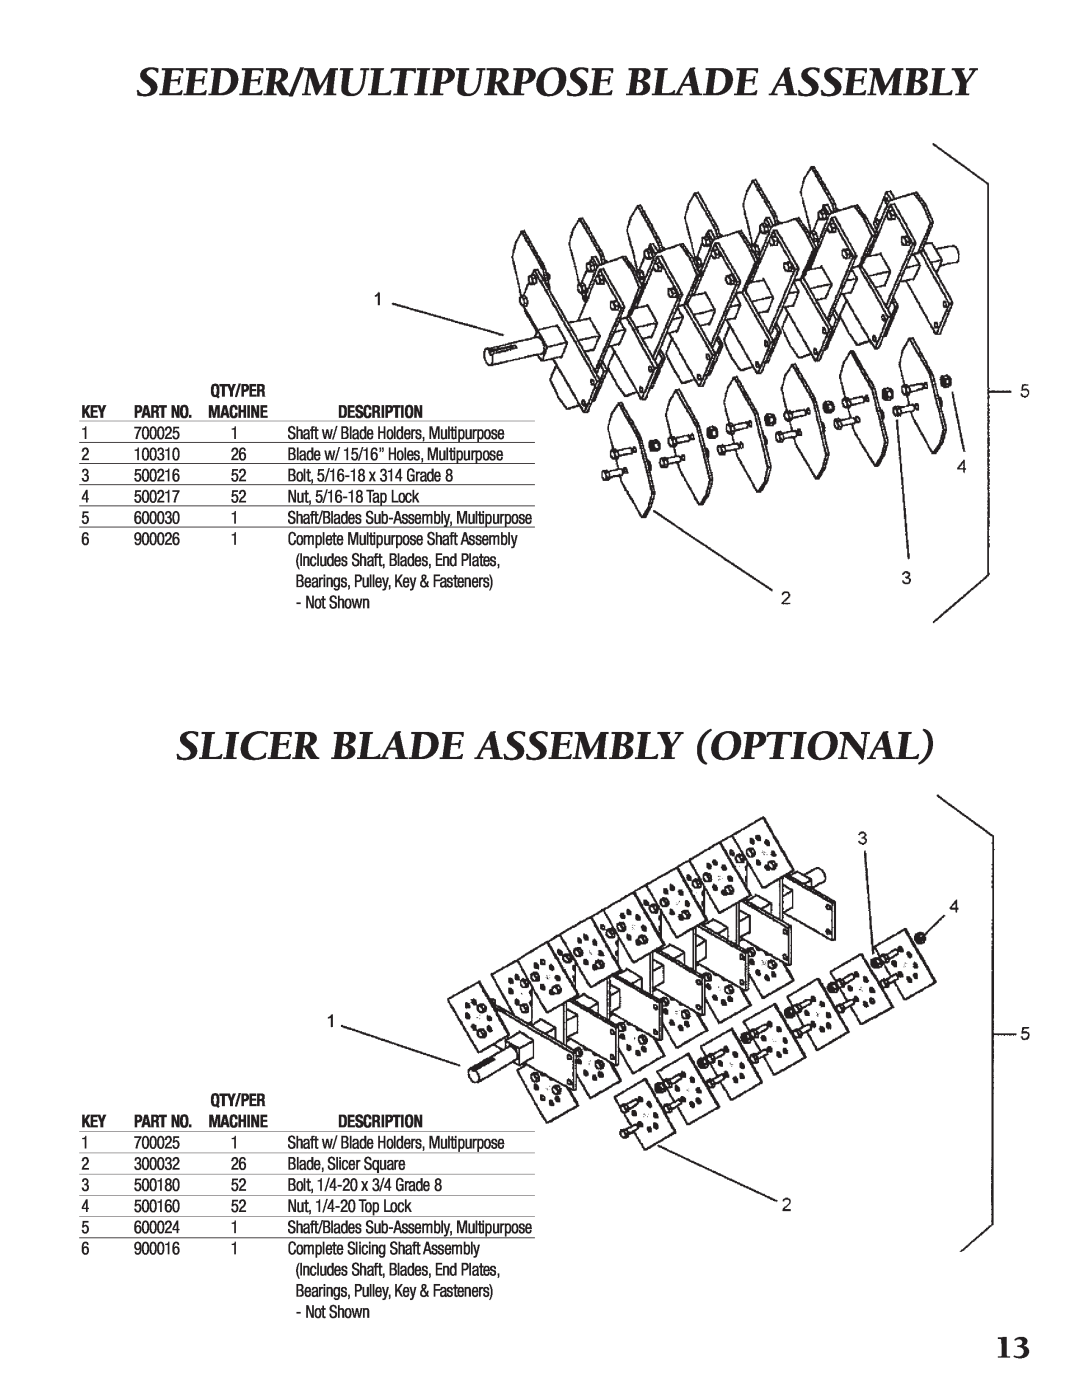 Little Wonder TSS-20 Seeder/Multipurpose Blade Assembly, Slicer Blade Assembly Optional, Qty/Per, Machine, Description 